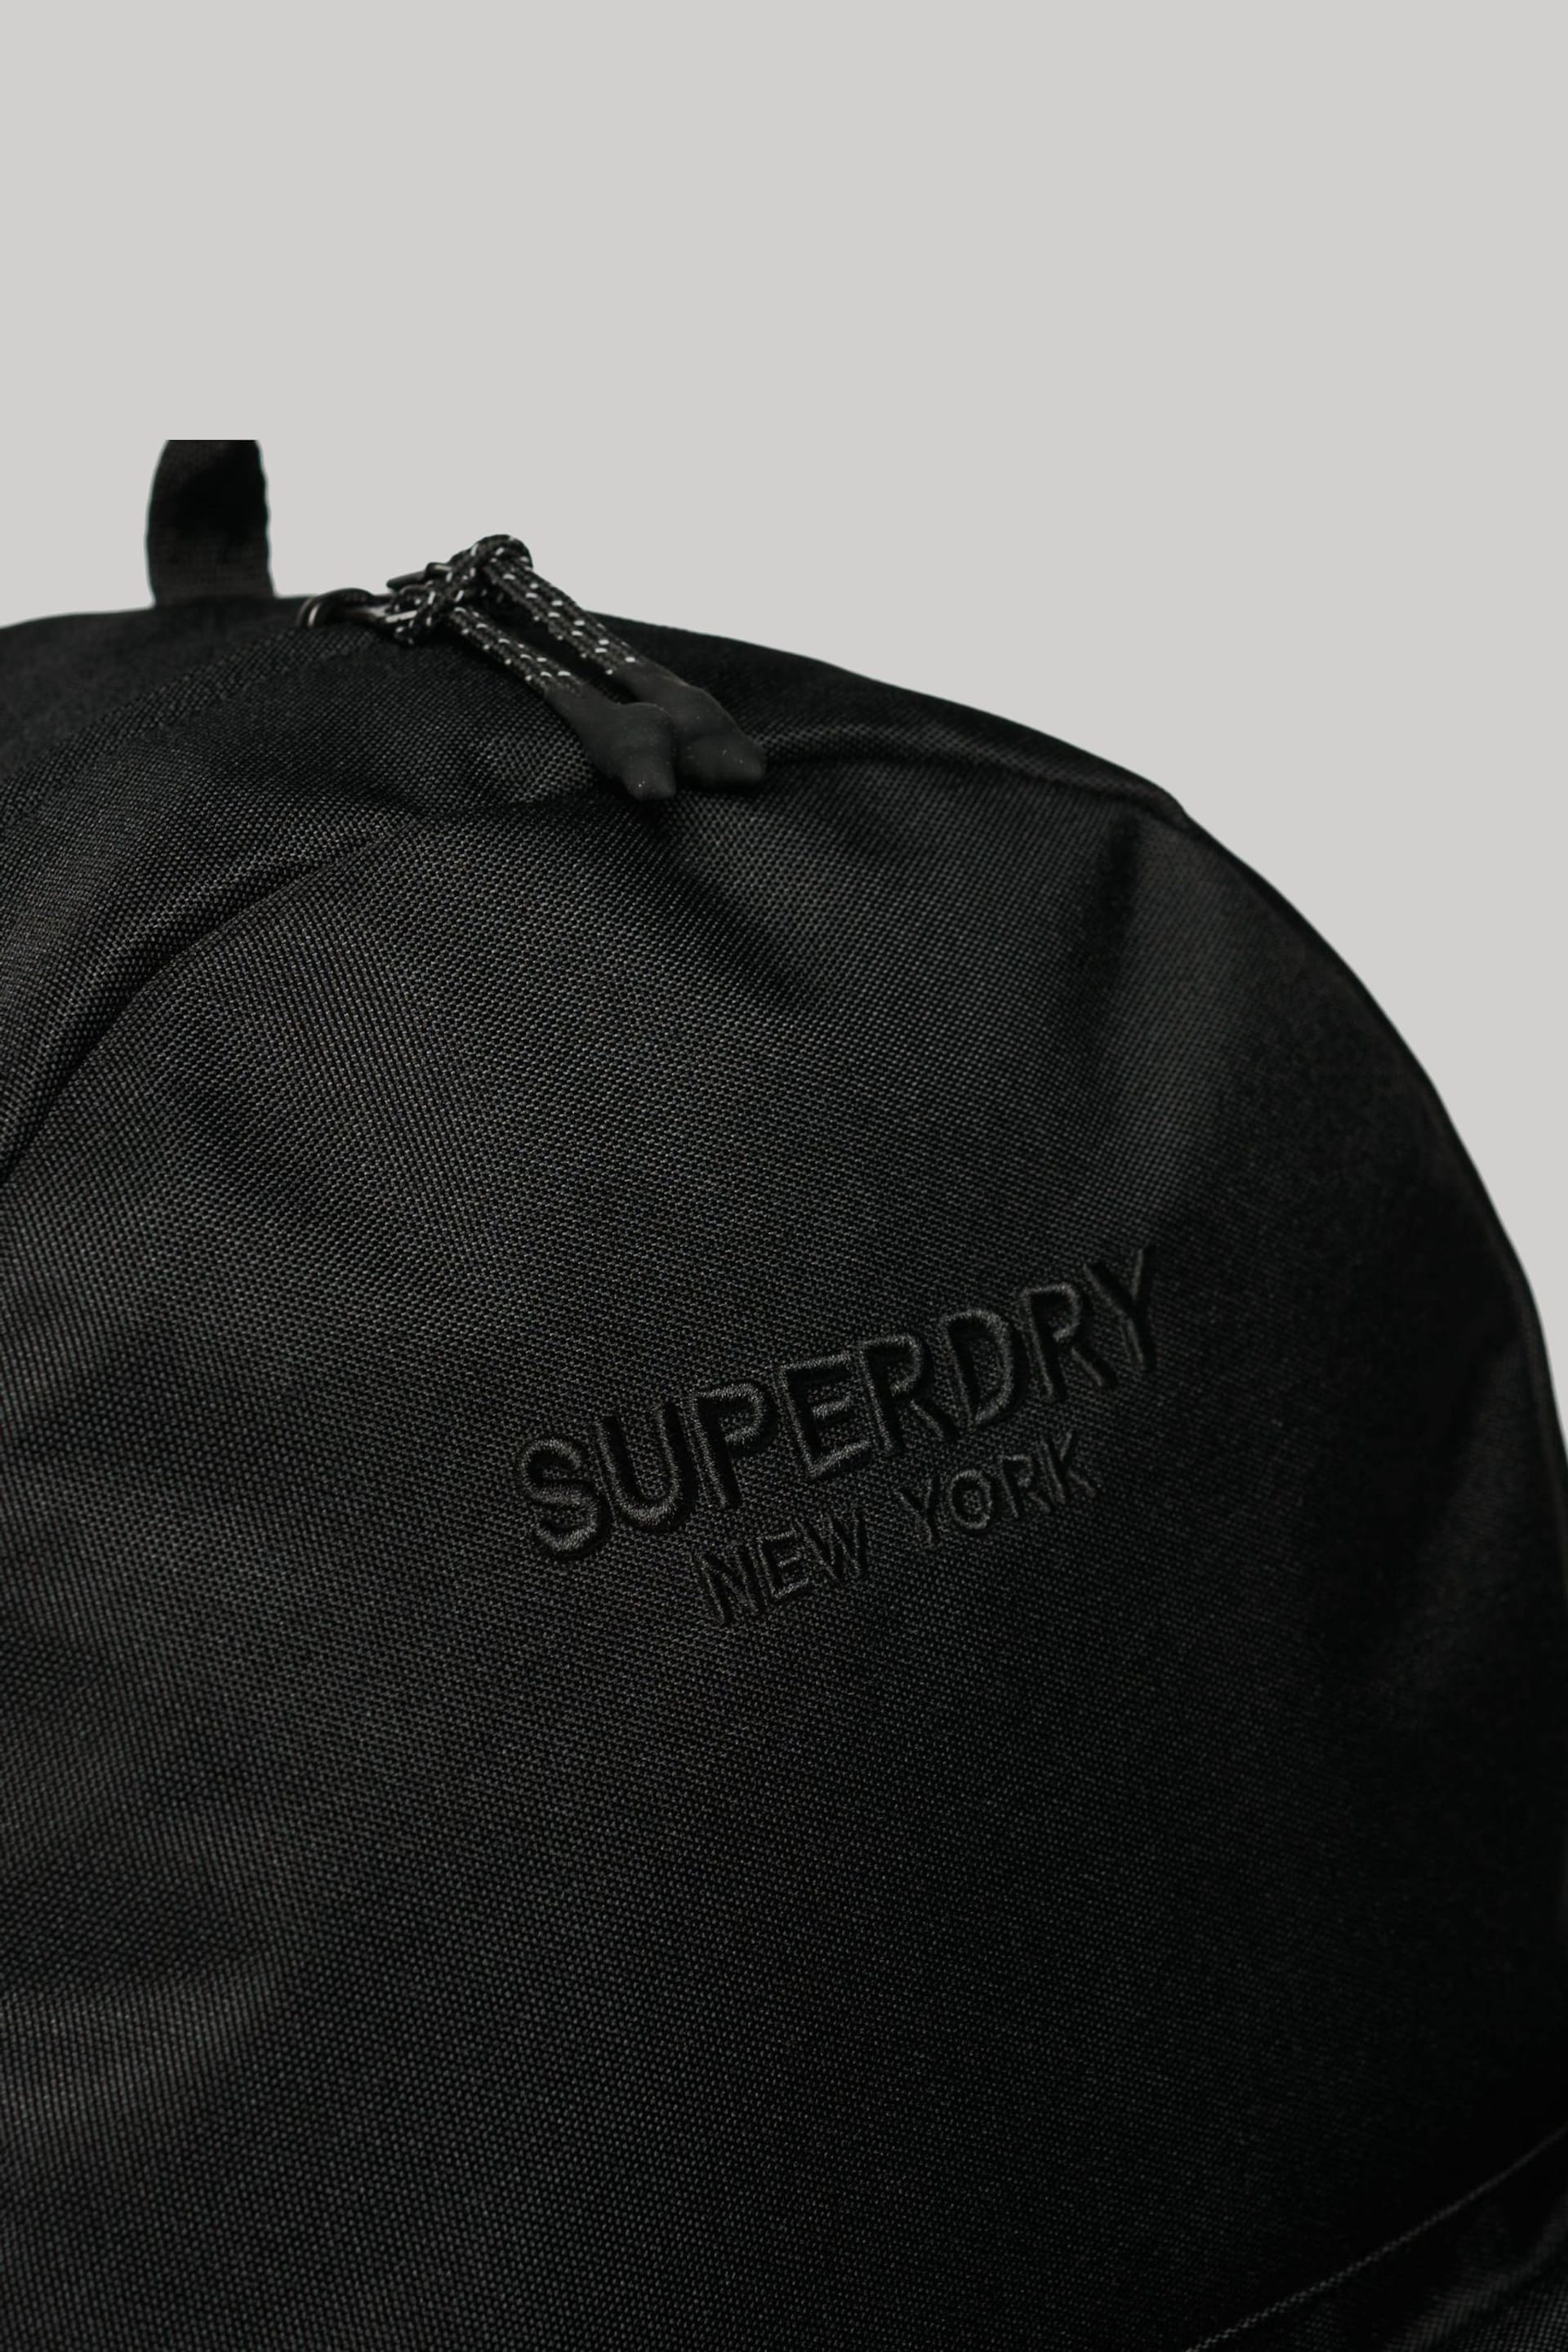 SUPERDRY Black SUPERDRY Luxury Sport Montana Backpack - Image 5 of 5